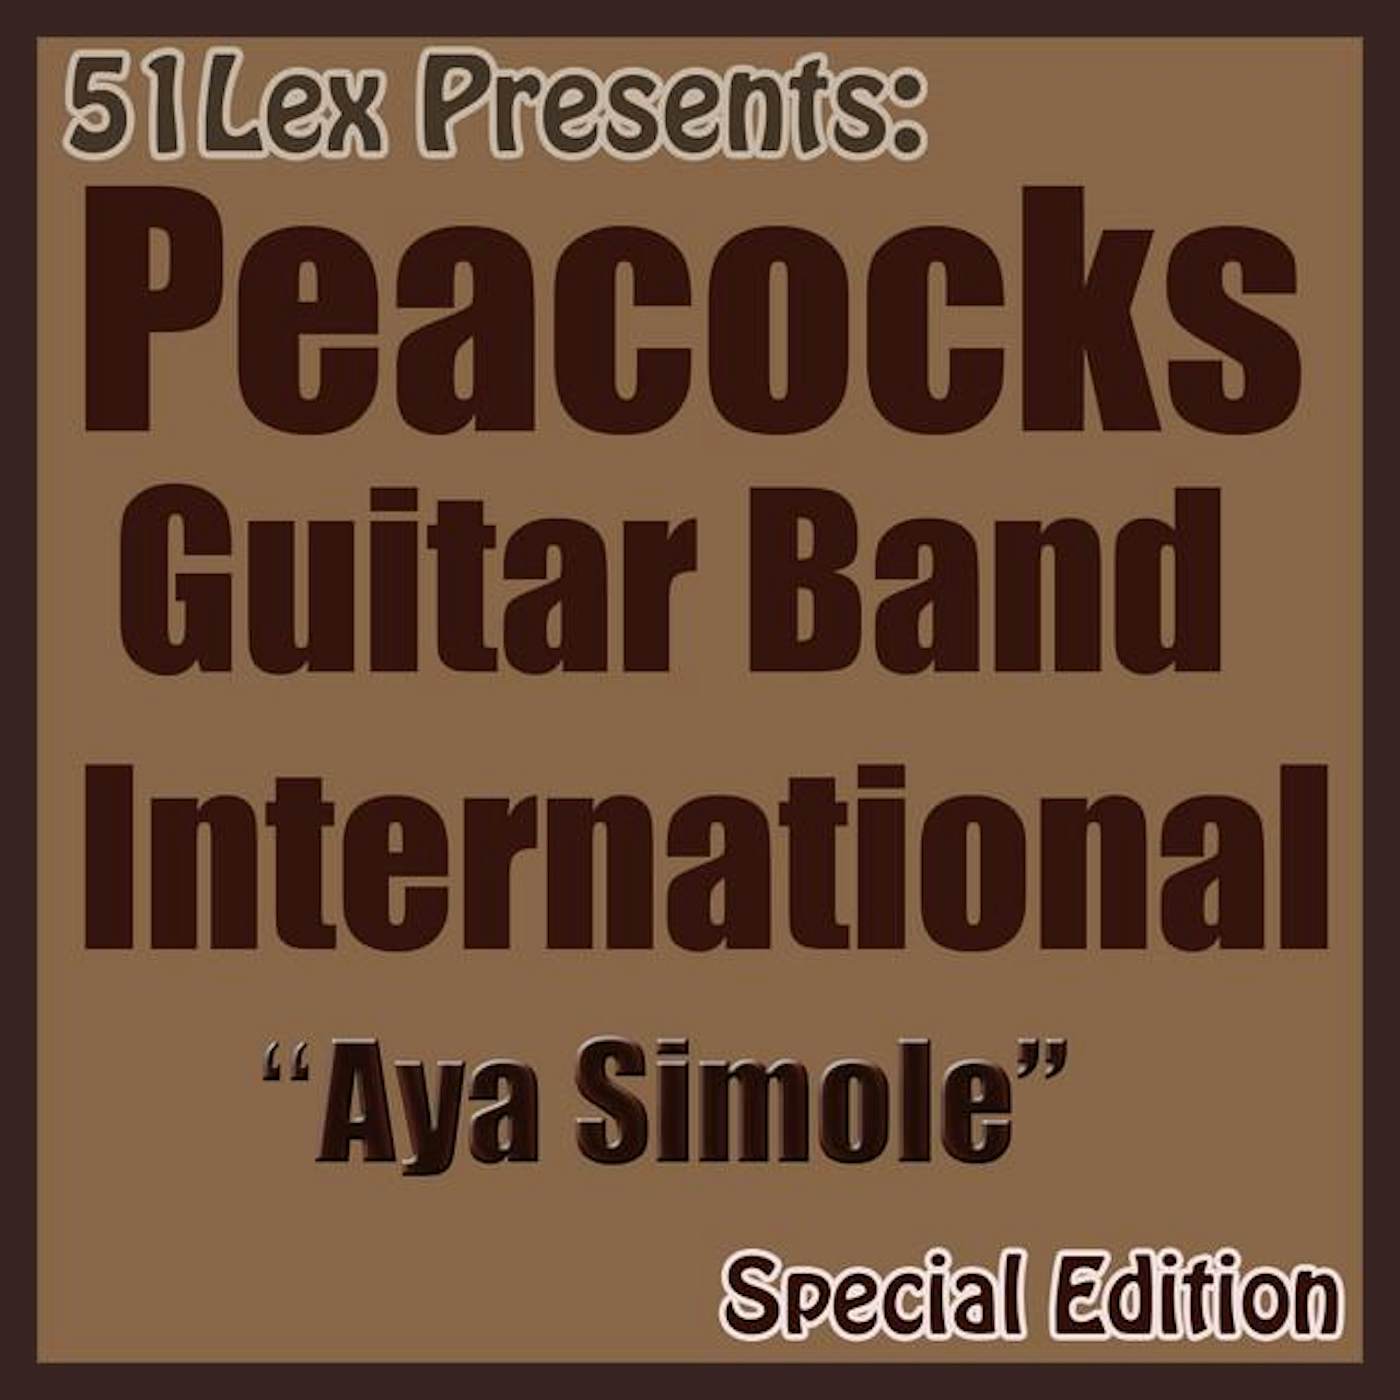 Peacocks Guitar Band International